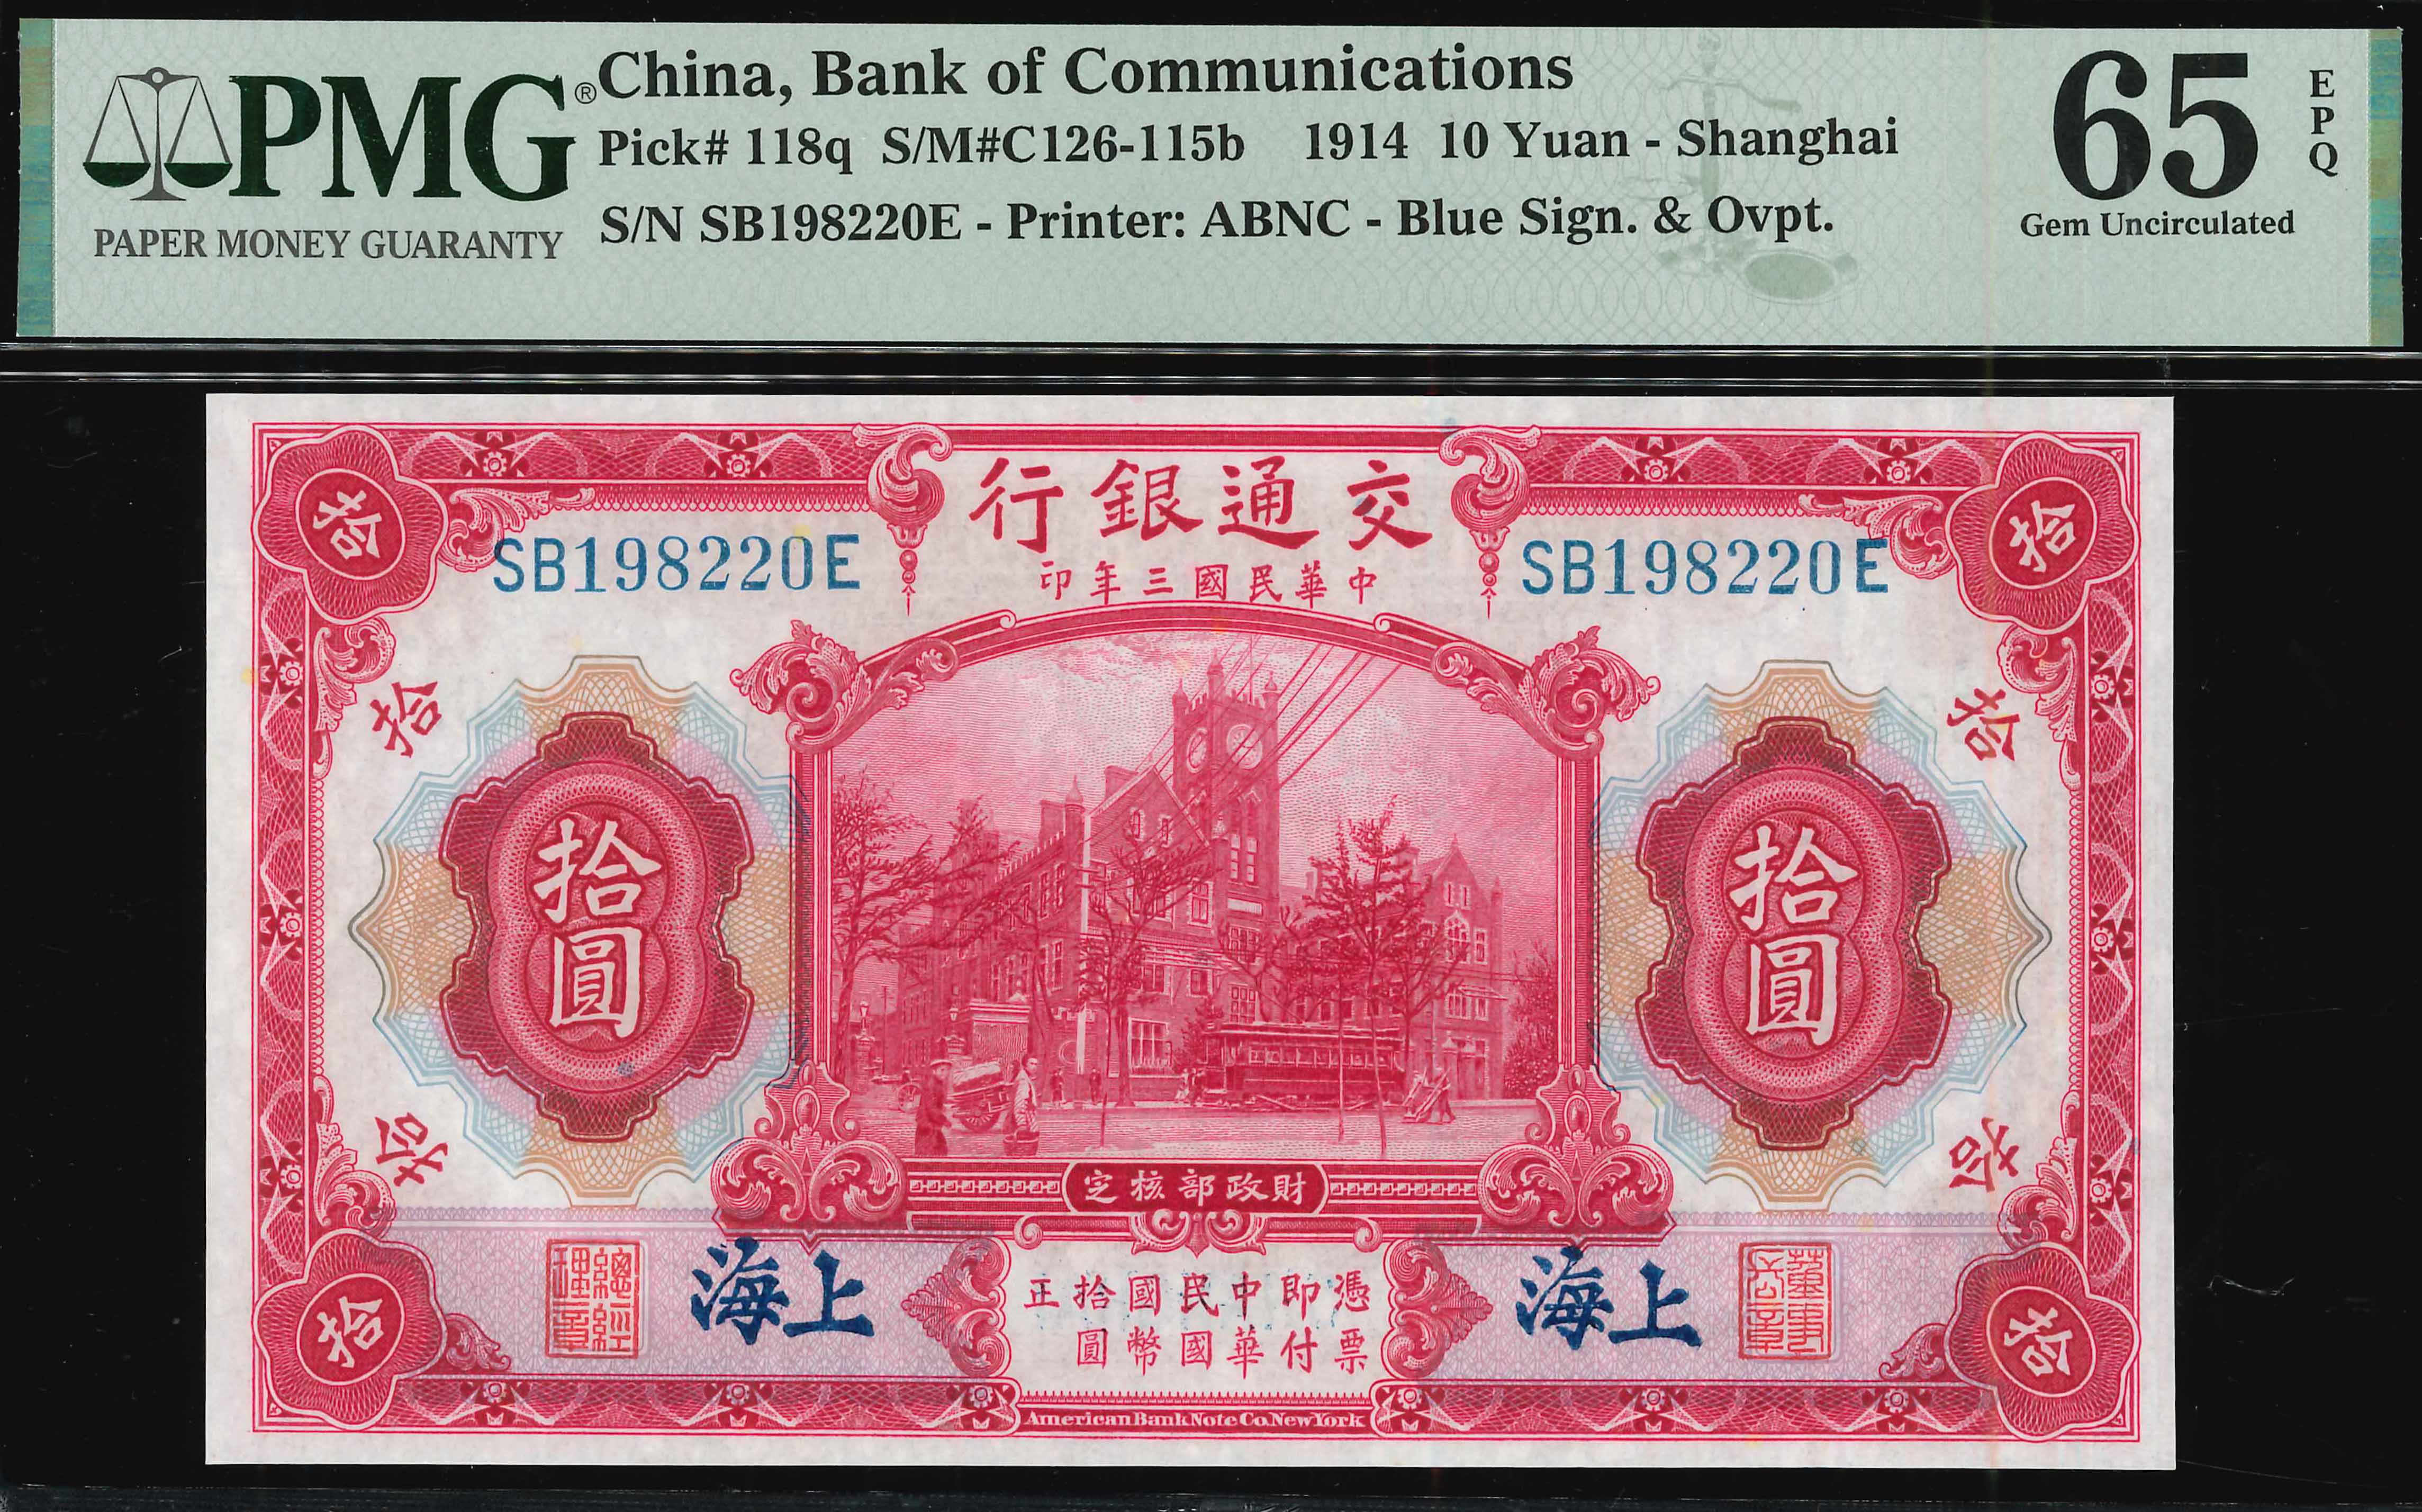 China, Bank of Communications, 1914, 10 Dollars, P-118q, S/N